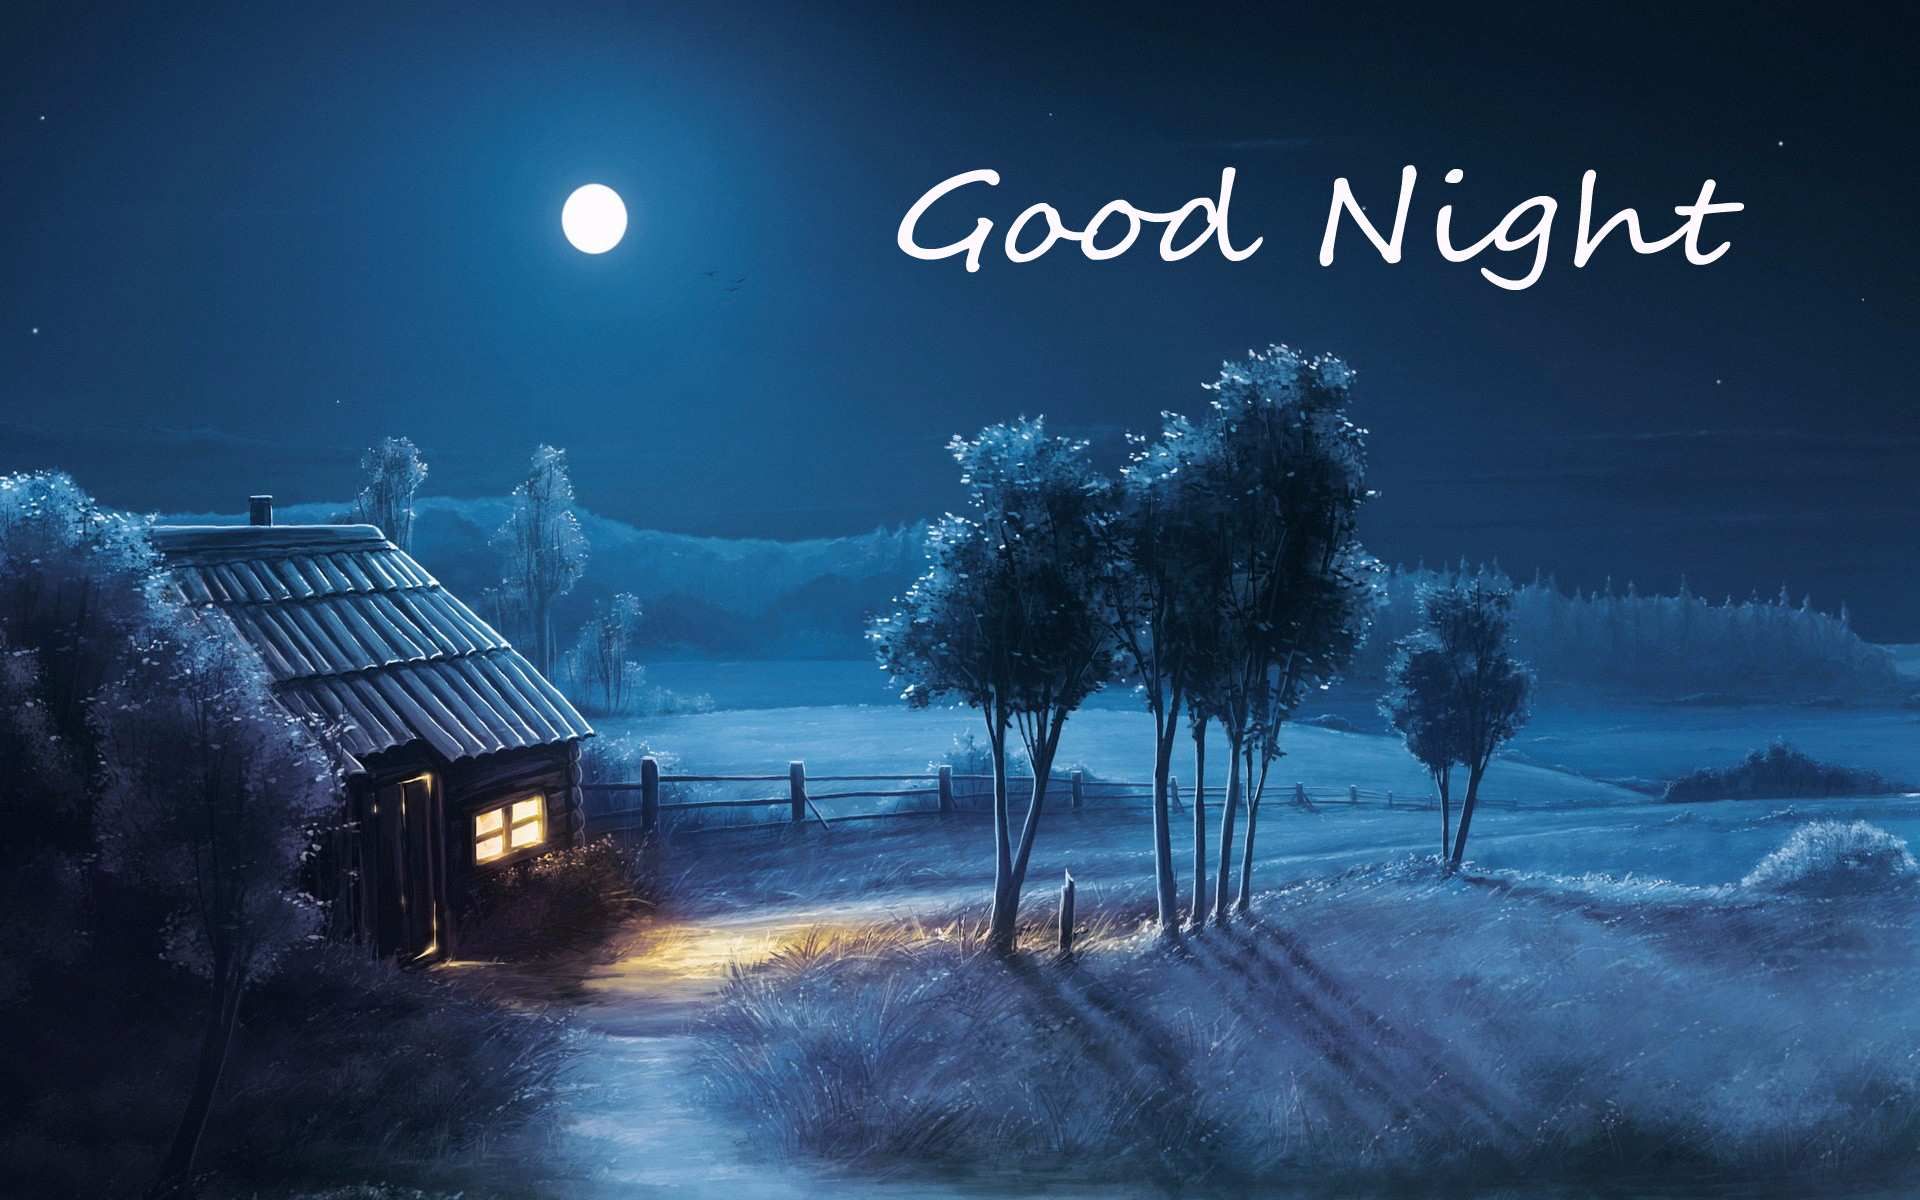 Best HD Good Night Image Wallpaper Most Beautiful